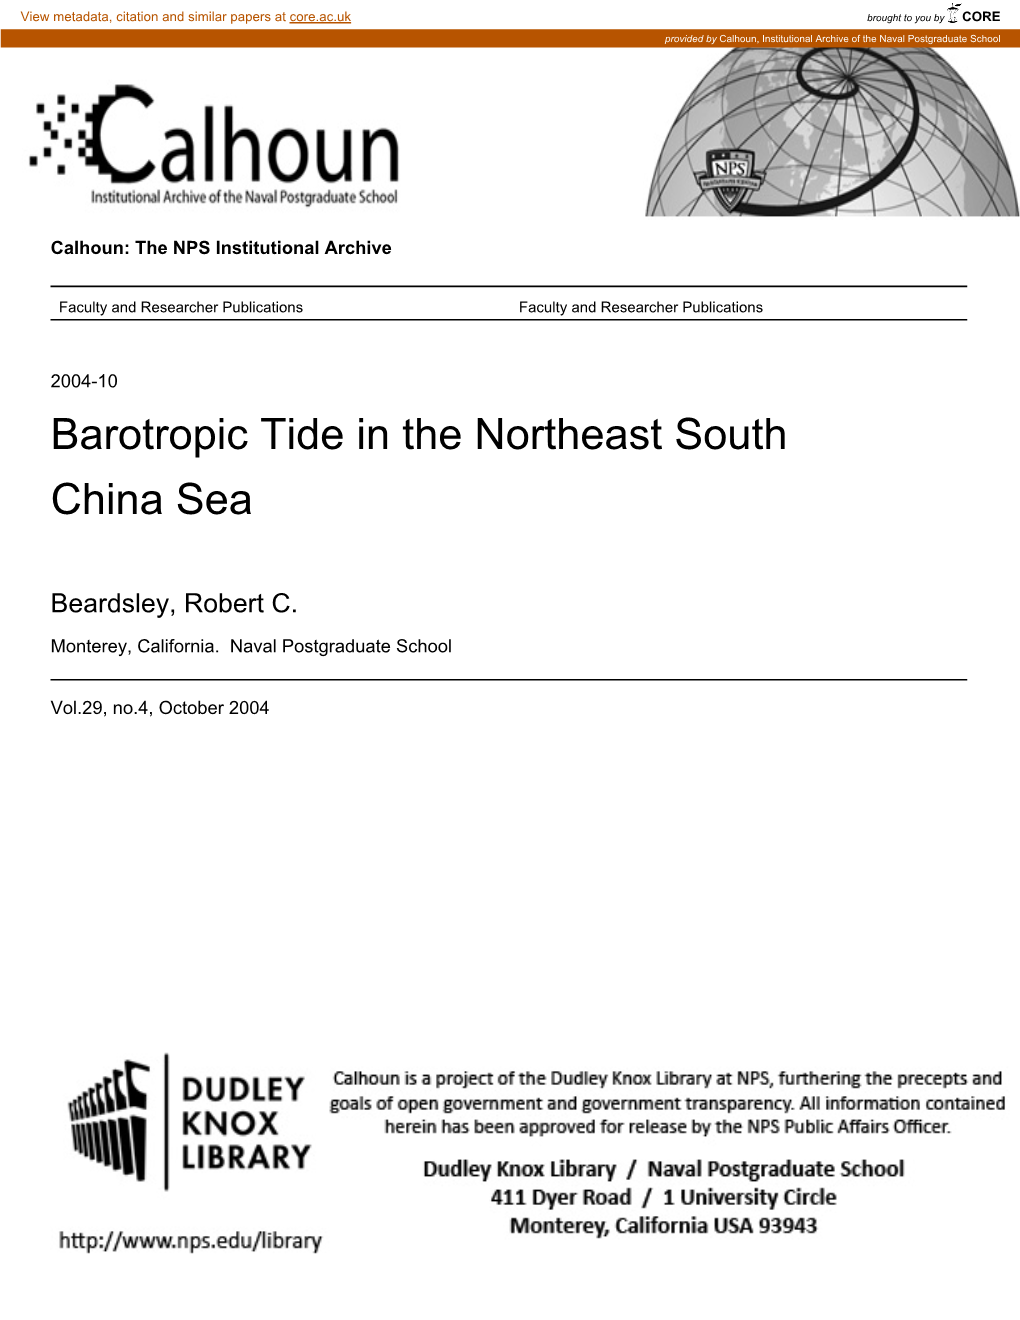 Barotropic Tide in the Northeast South China Sea